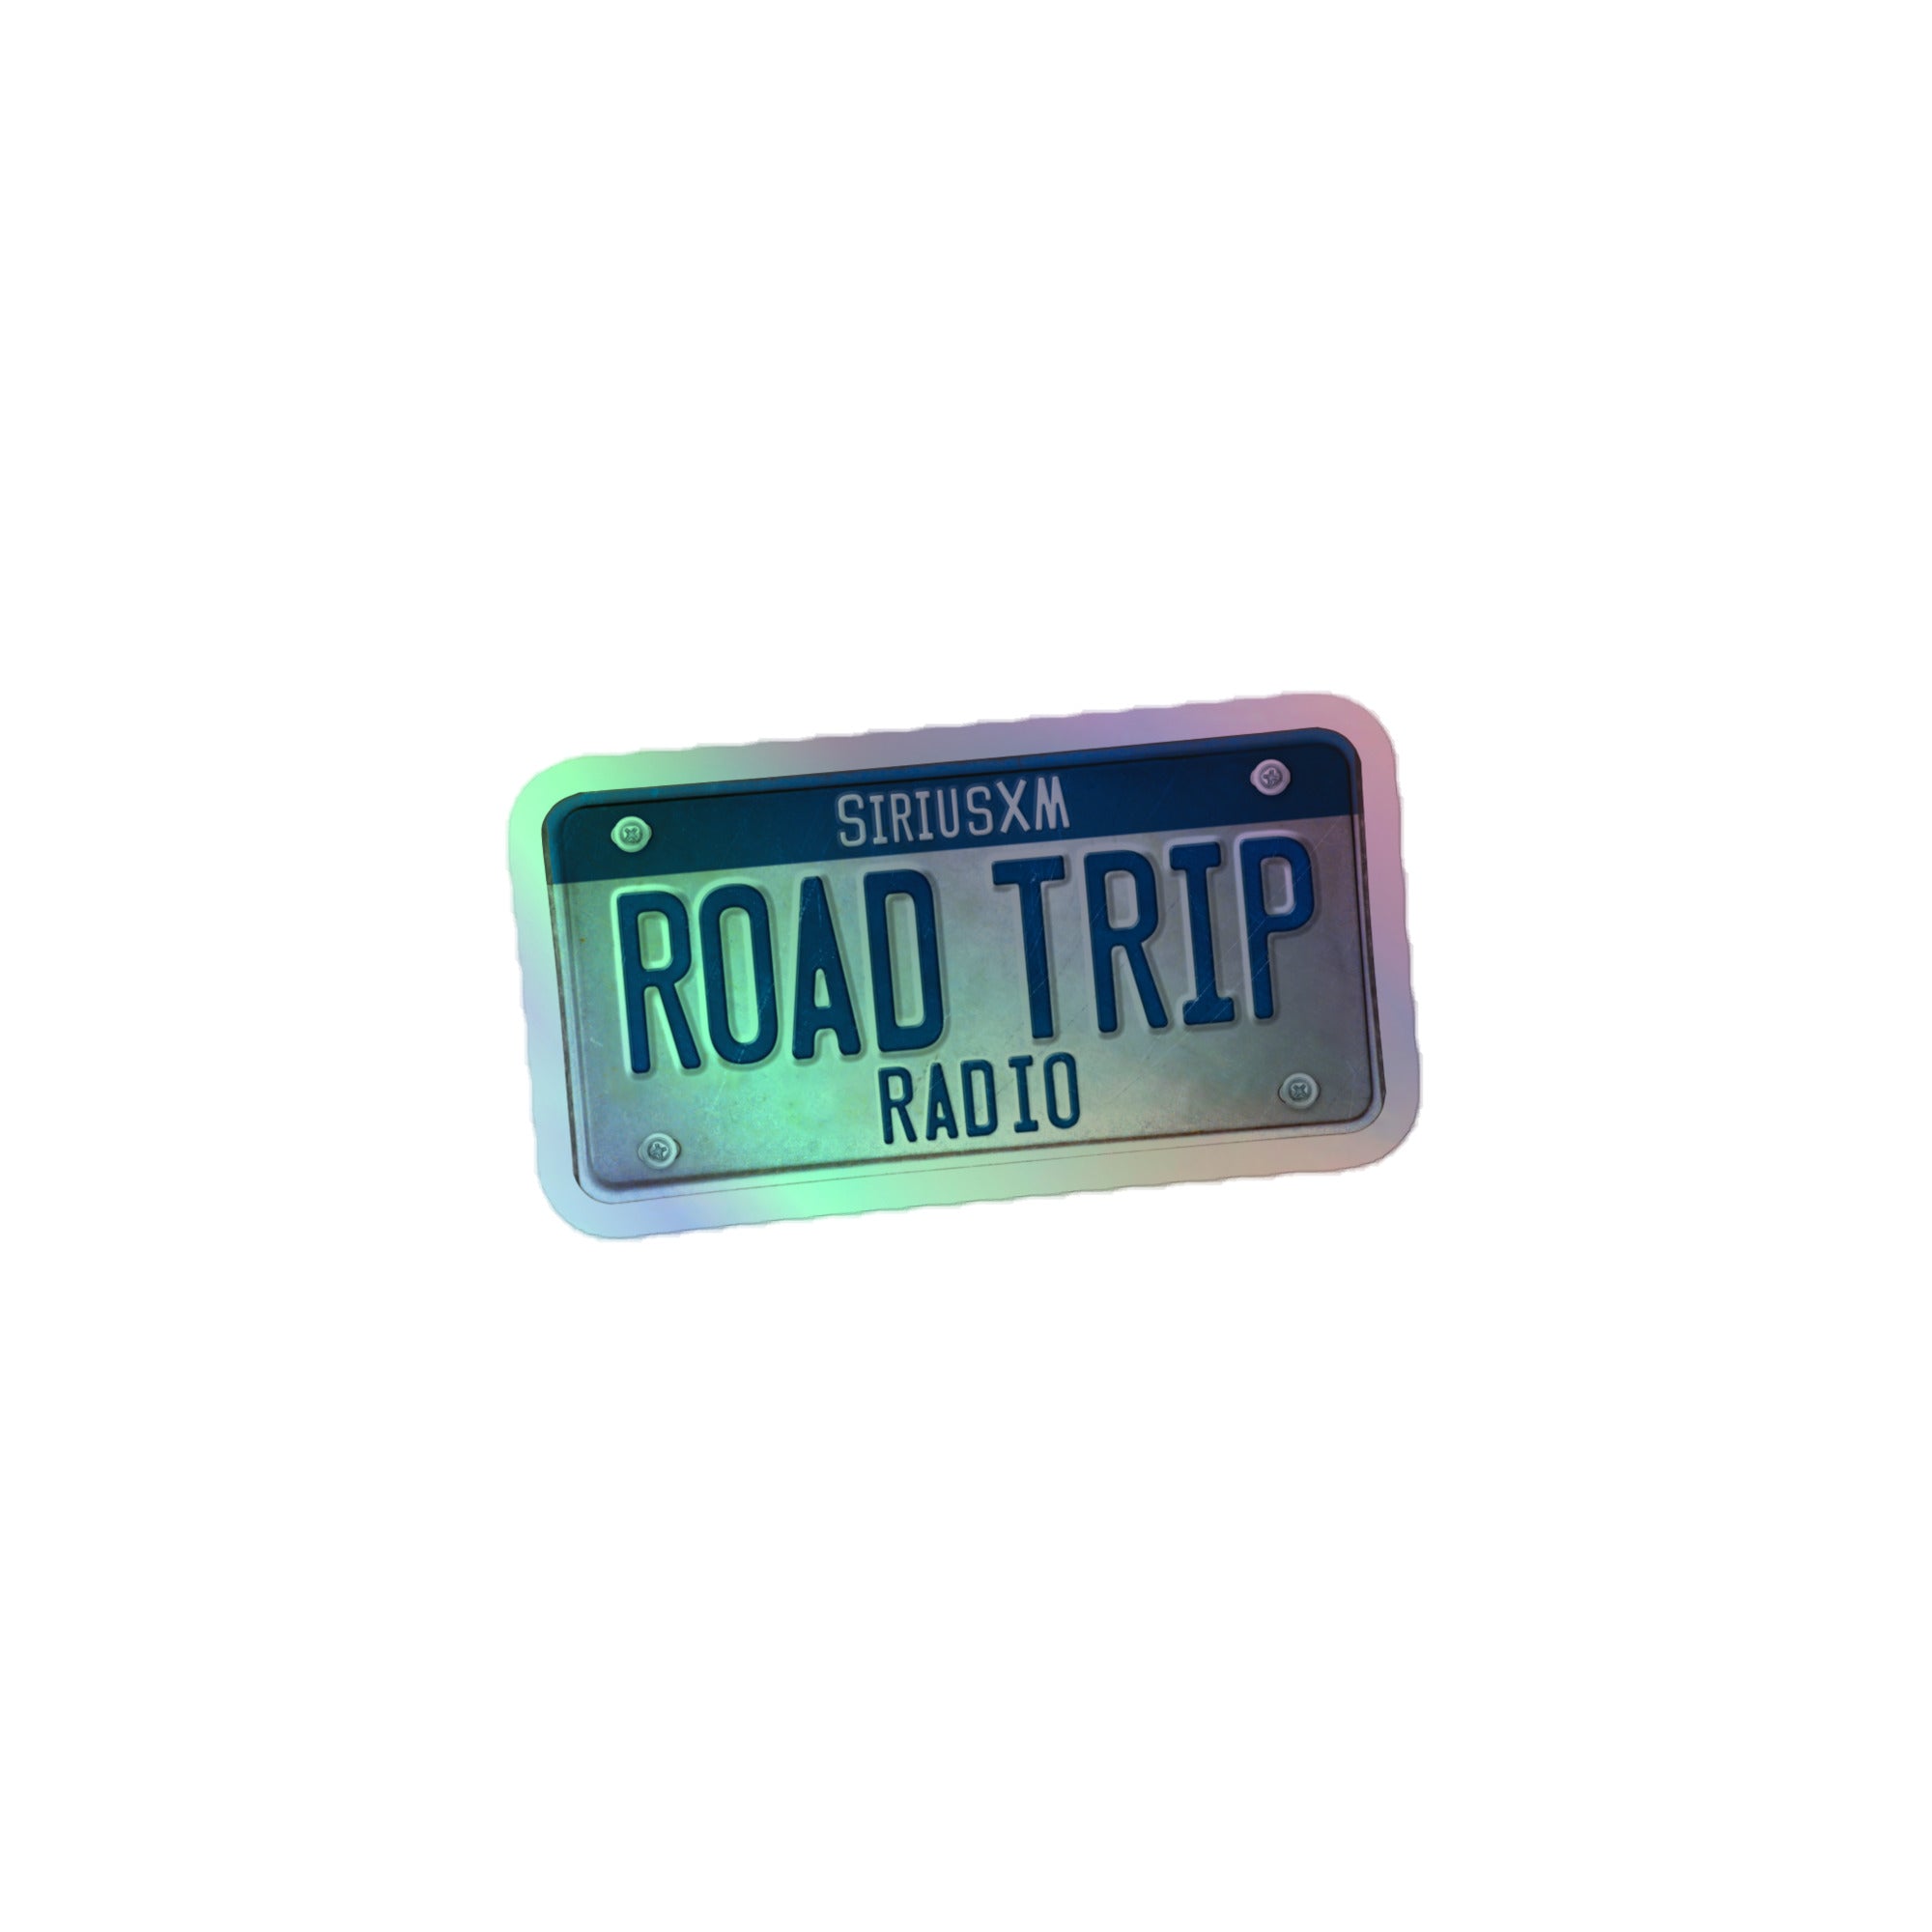 Road Trip Radio: Holographic Sticker